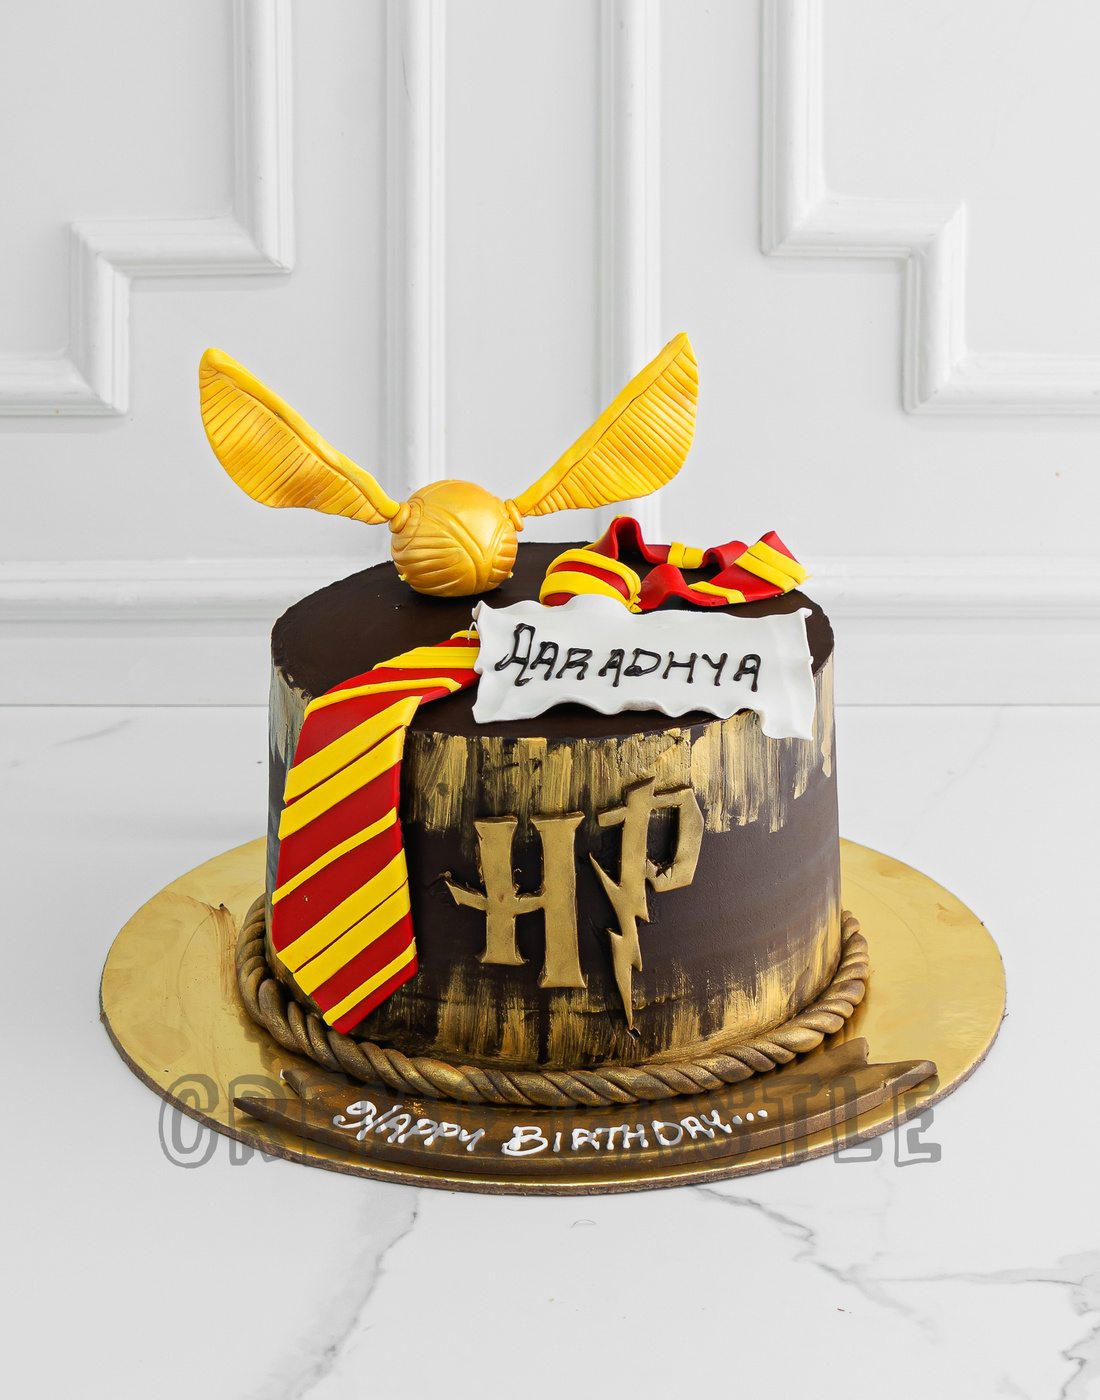 Harry Potter Tie Cake